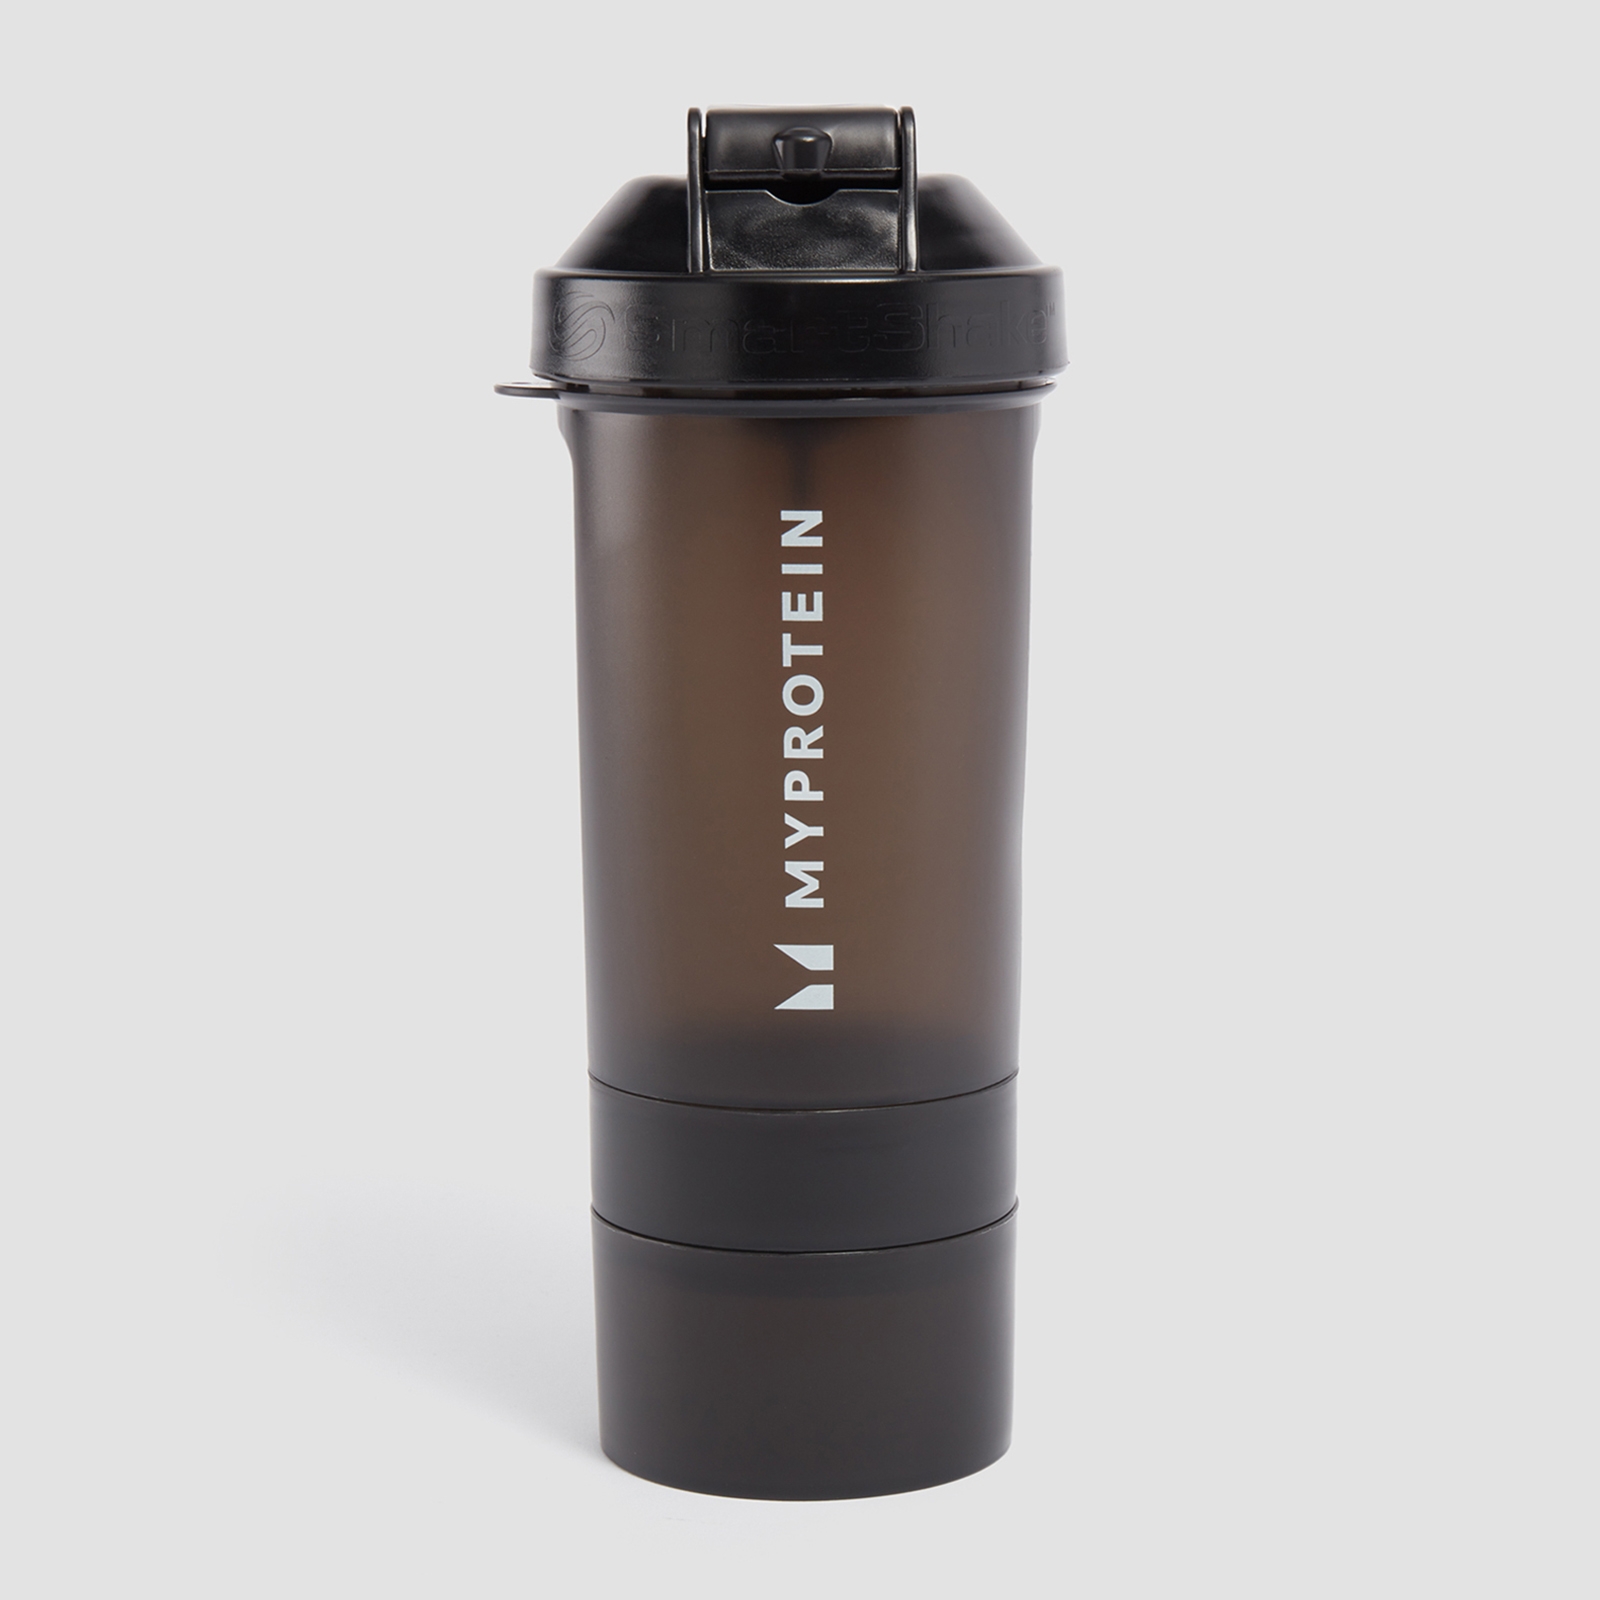 Myprotein Smart Shaker veliki (800 ml) – crni